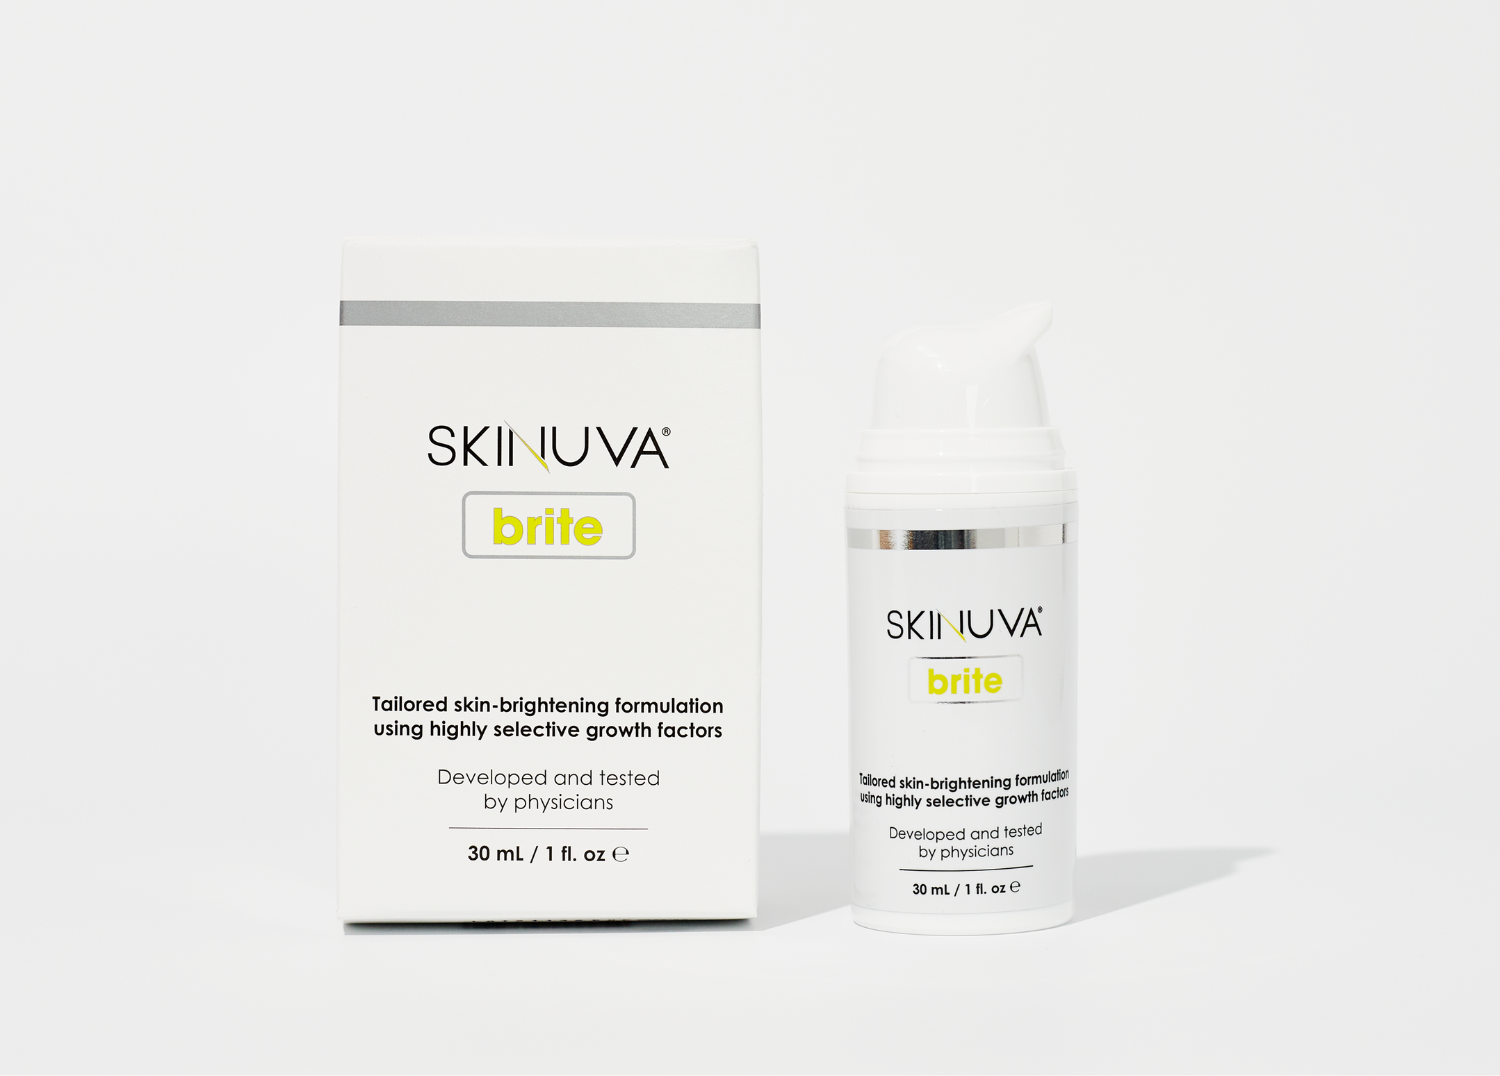 Skinuva Brite: The Revolutionary, Effective, Long-Term Treatment for Hyperpigmentation